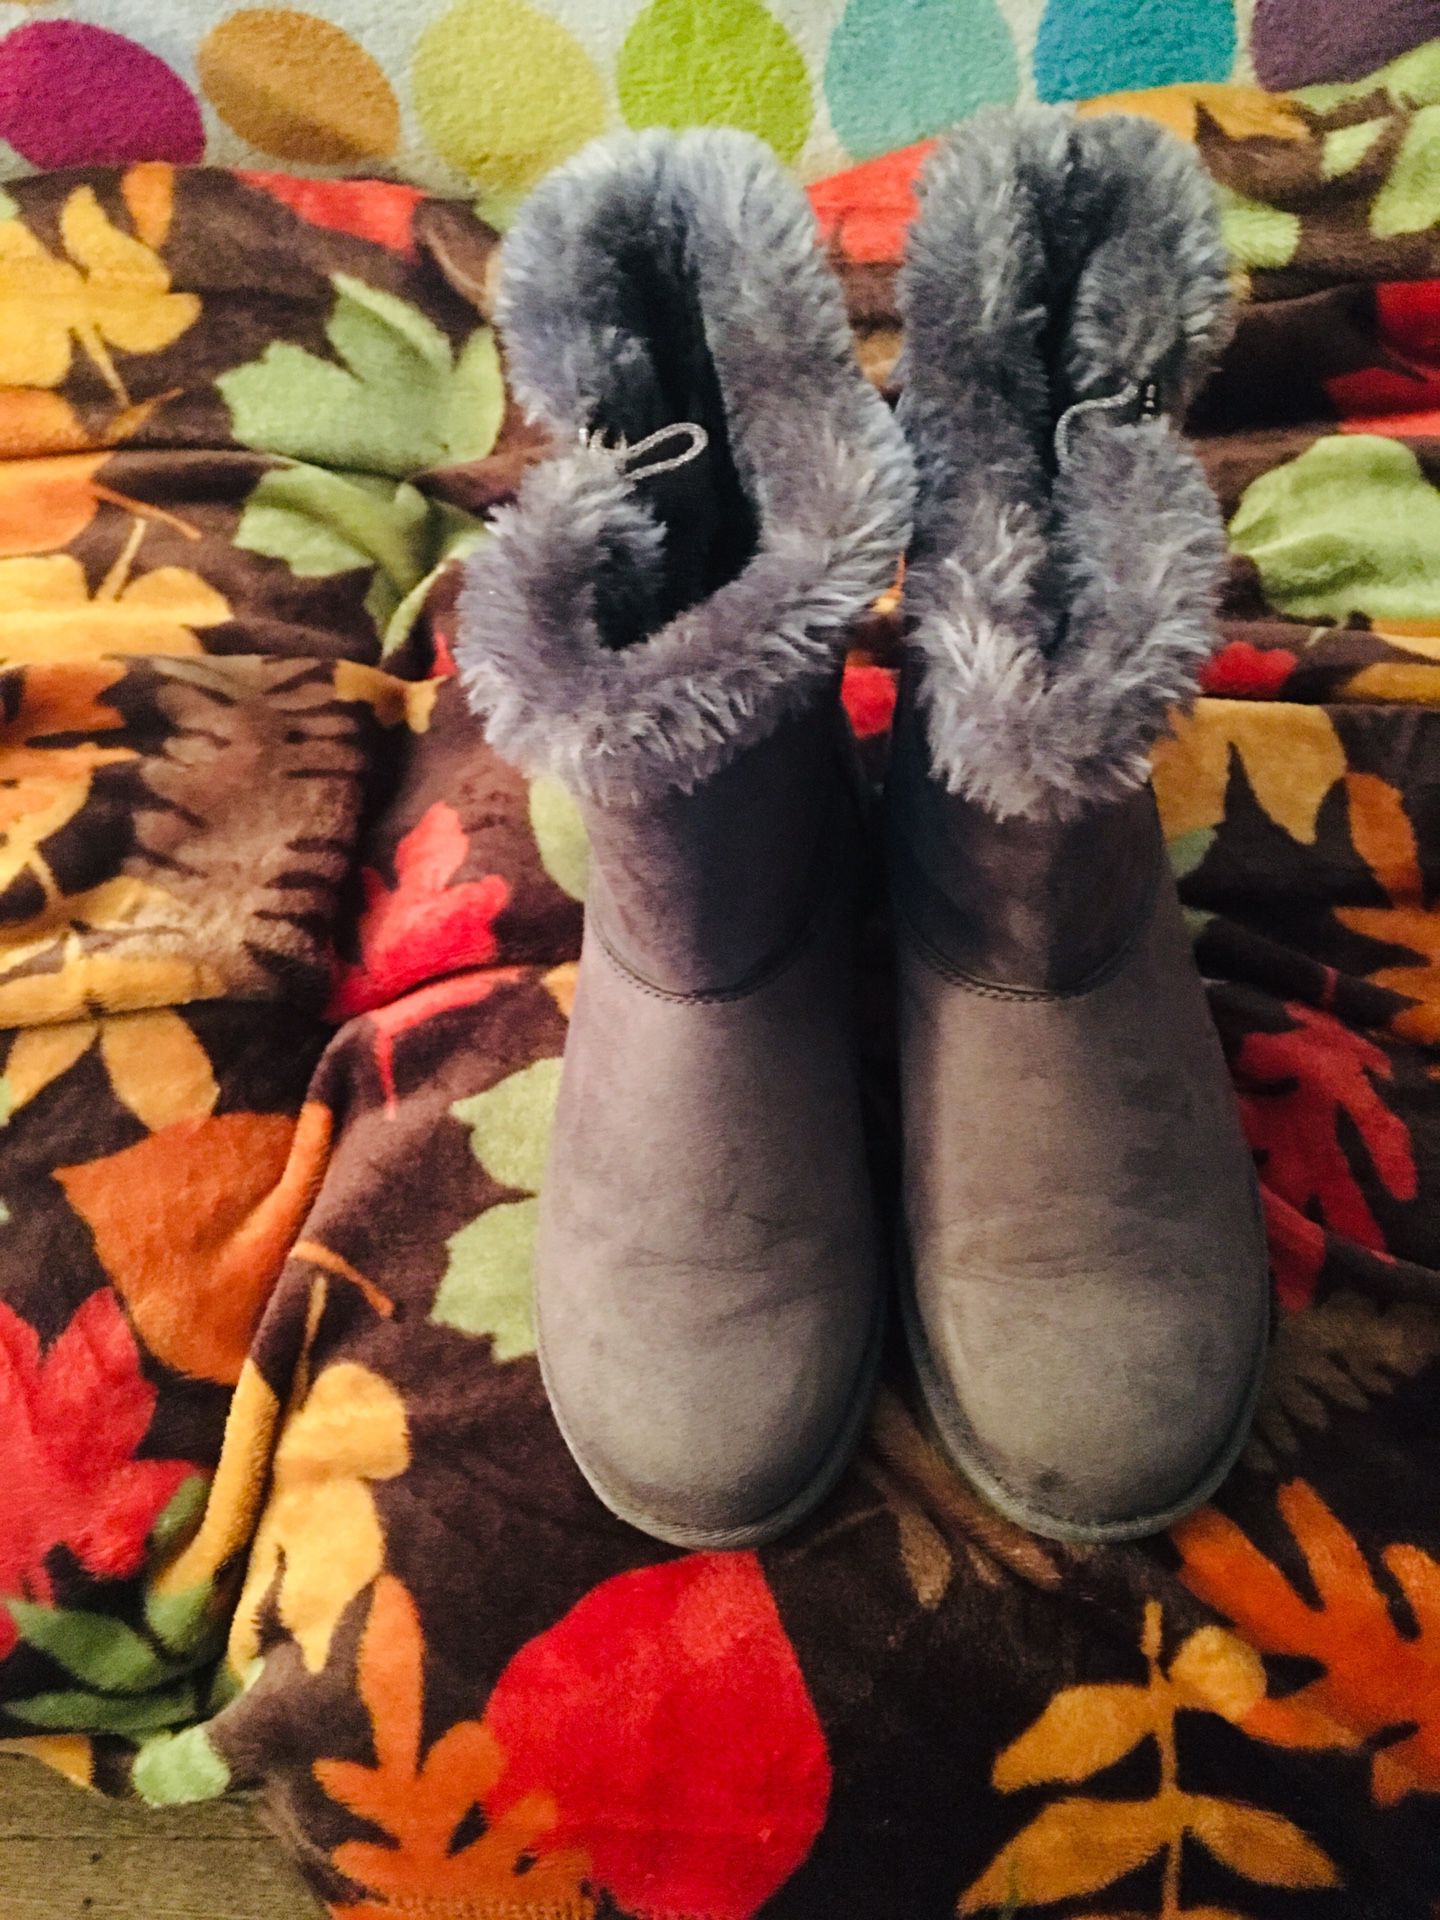 Women’s airwalk boots